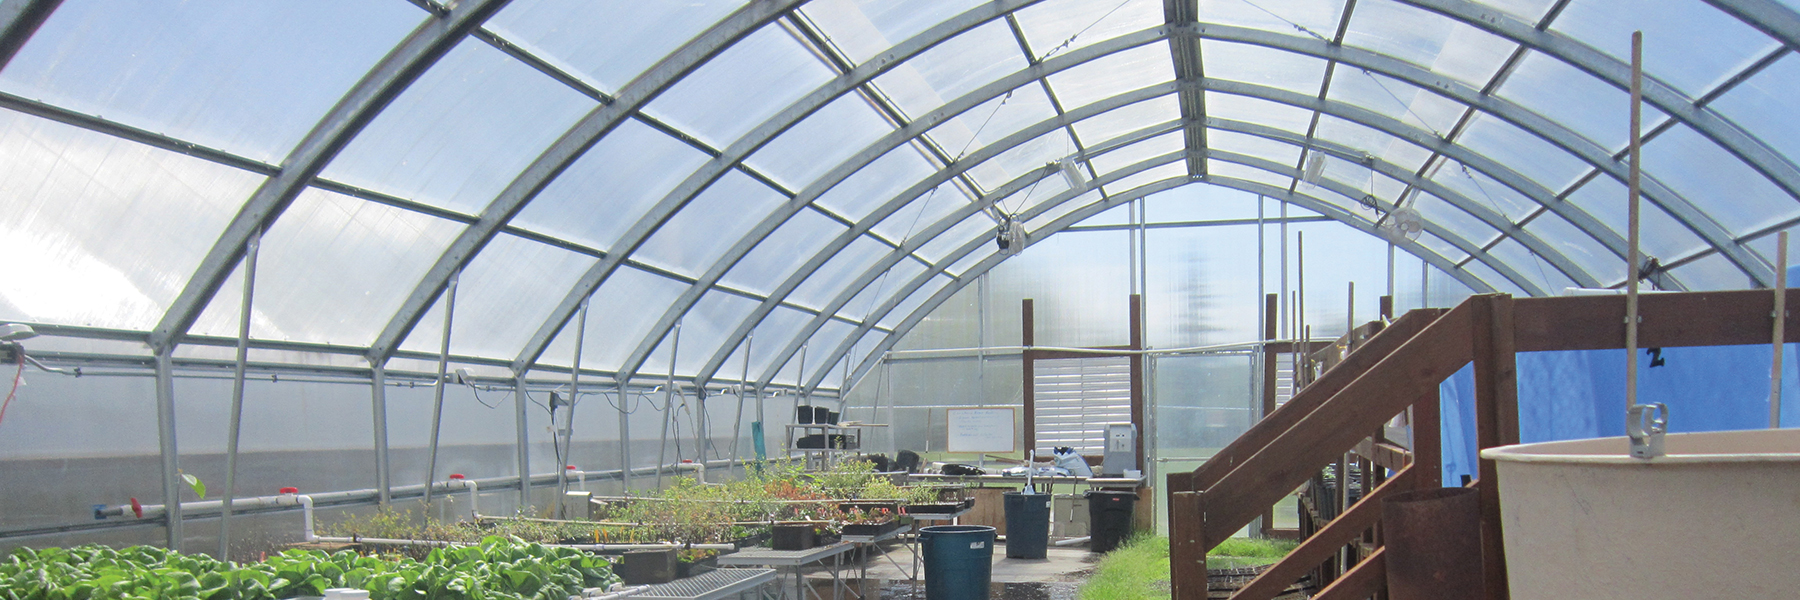 Gothic Premium Greenhouses Growspan